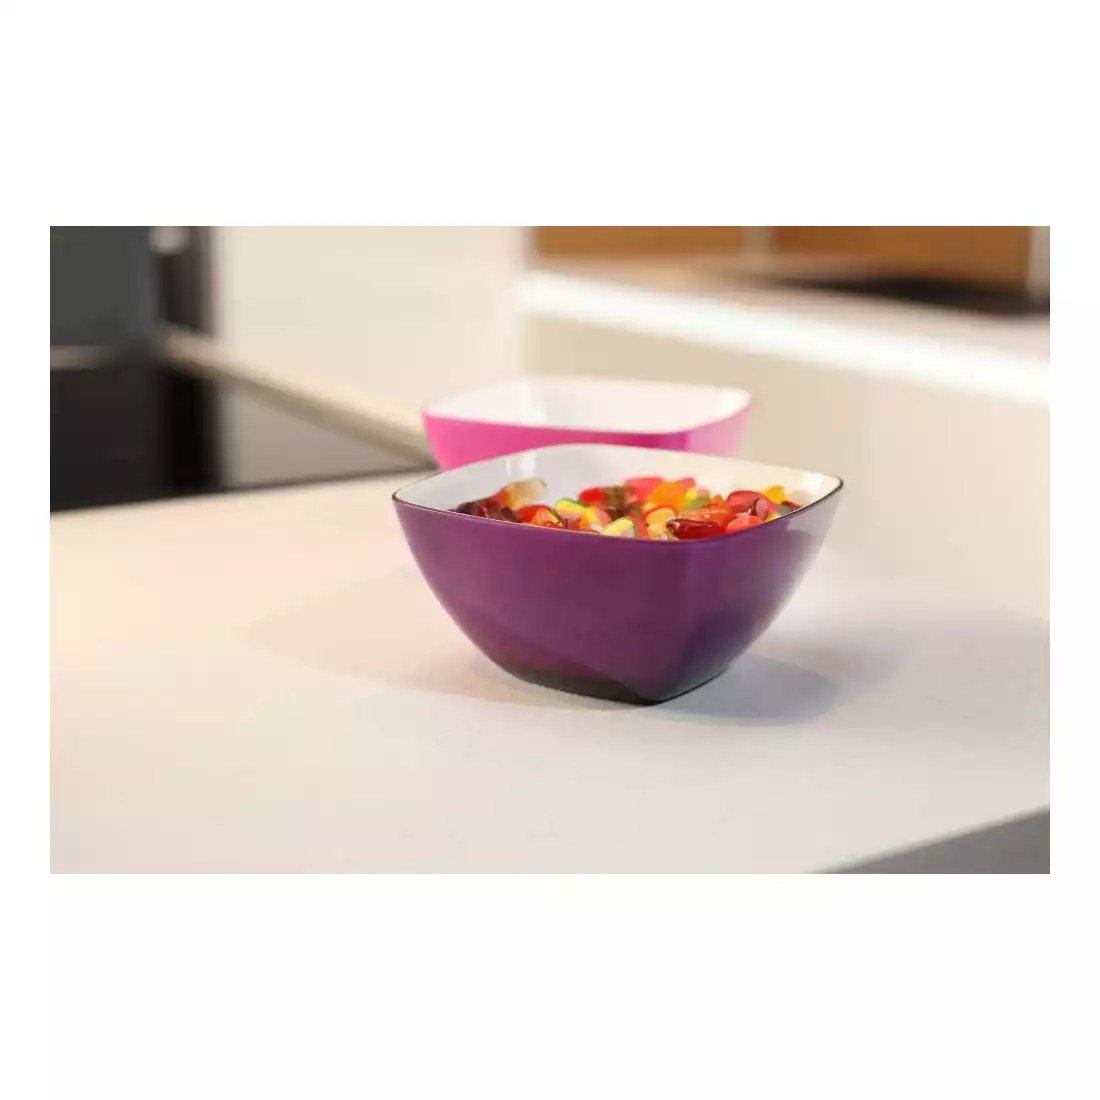 VIALLI DESIGN LIVIO square acrylic bowl, violet